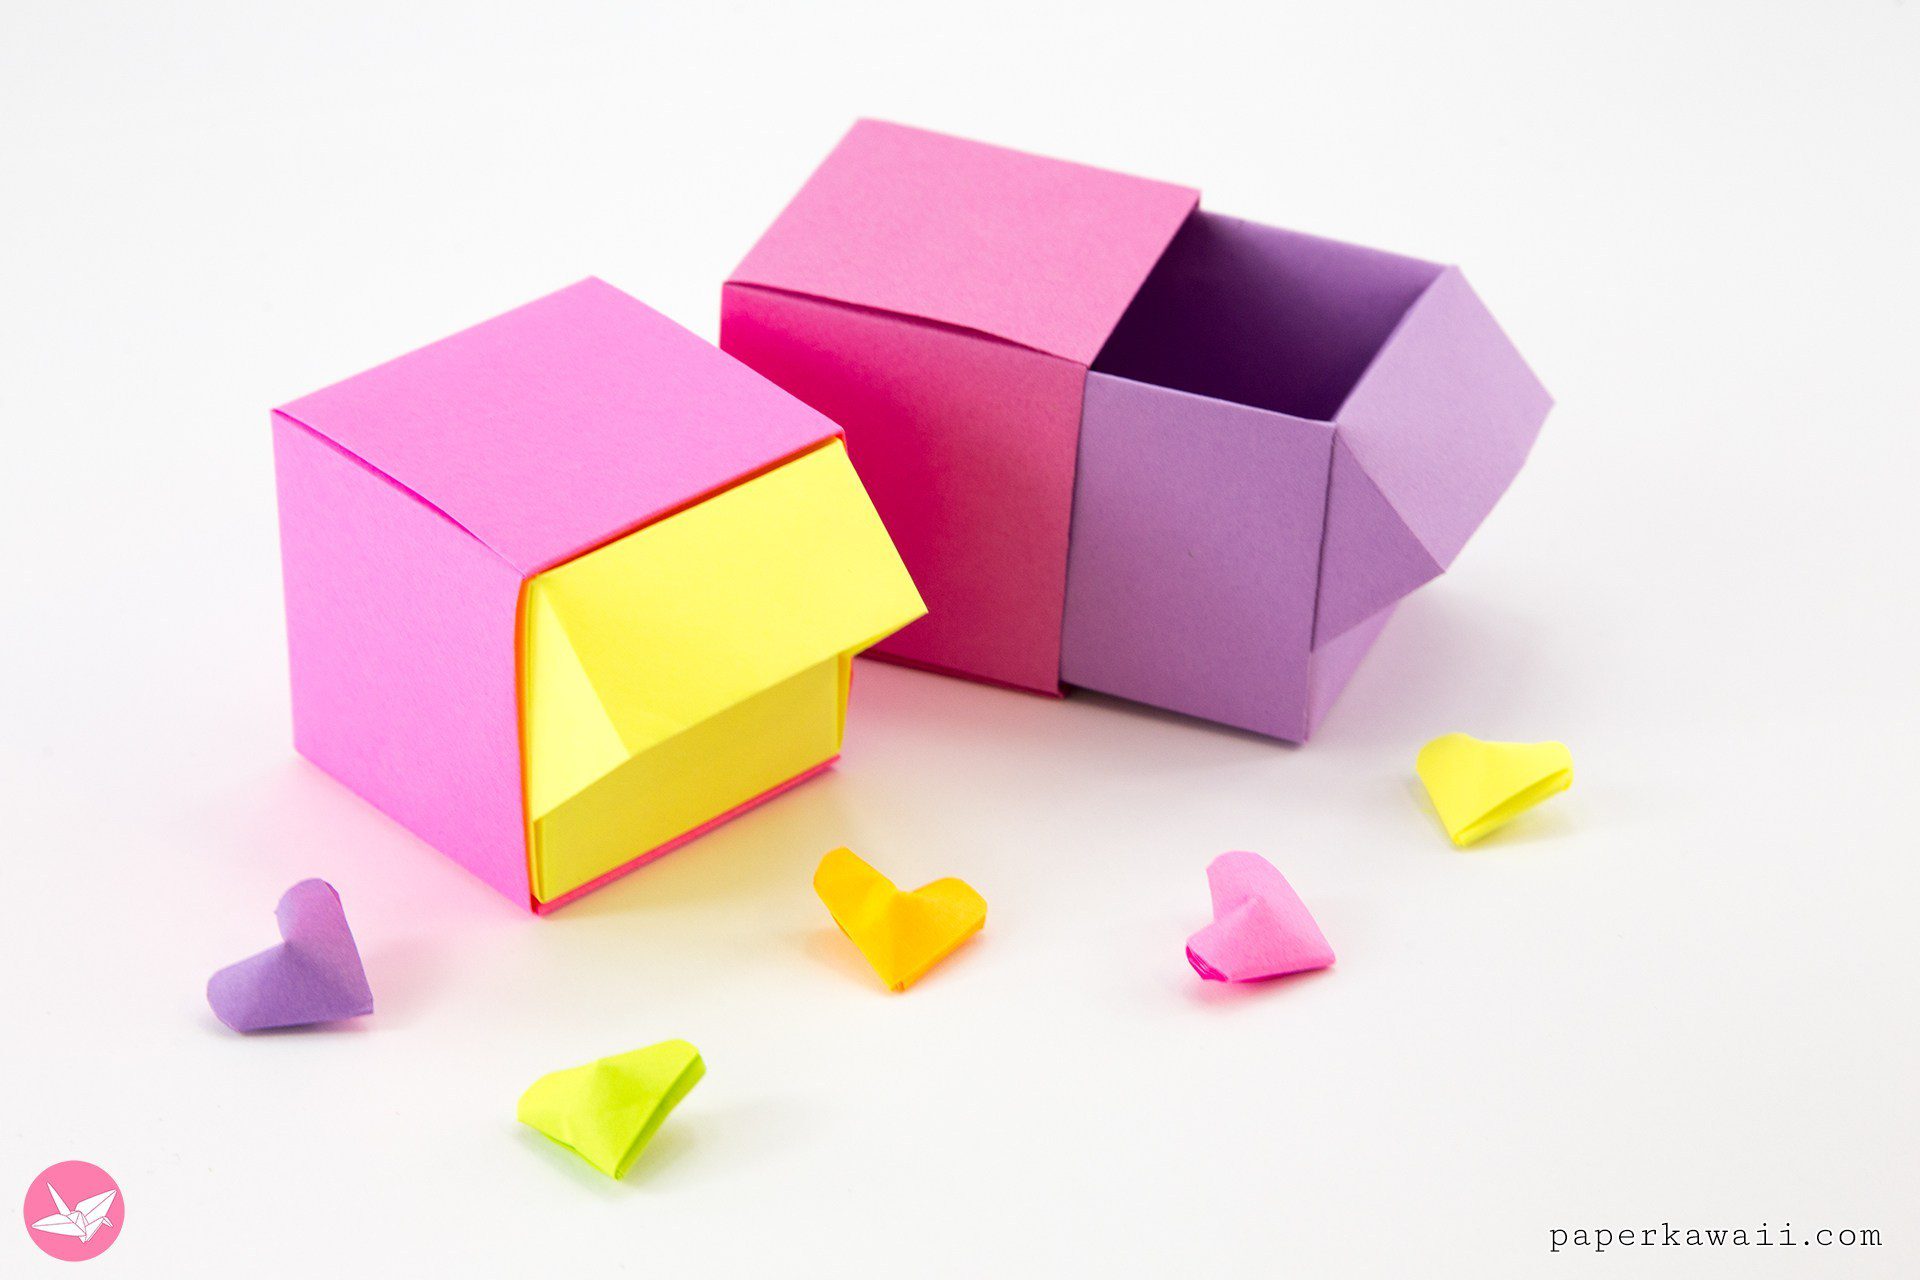 https://shop.paperkawaii.com/wp-content/uploads/2020/06/origami-drawer-box-tutorial-paper-kawaii-03.jpg